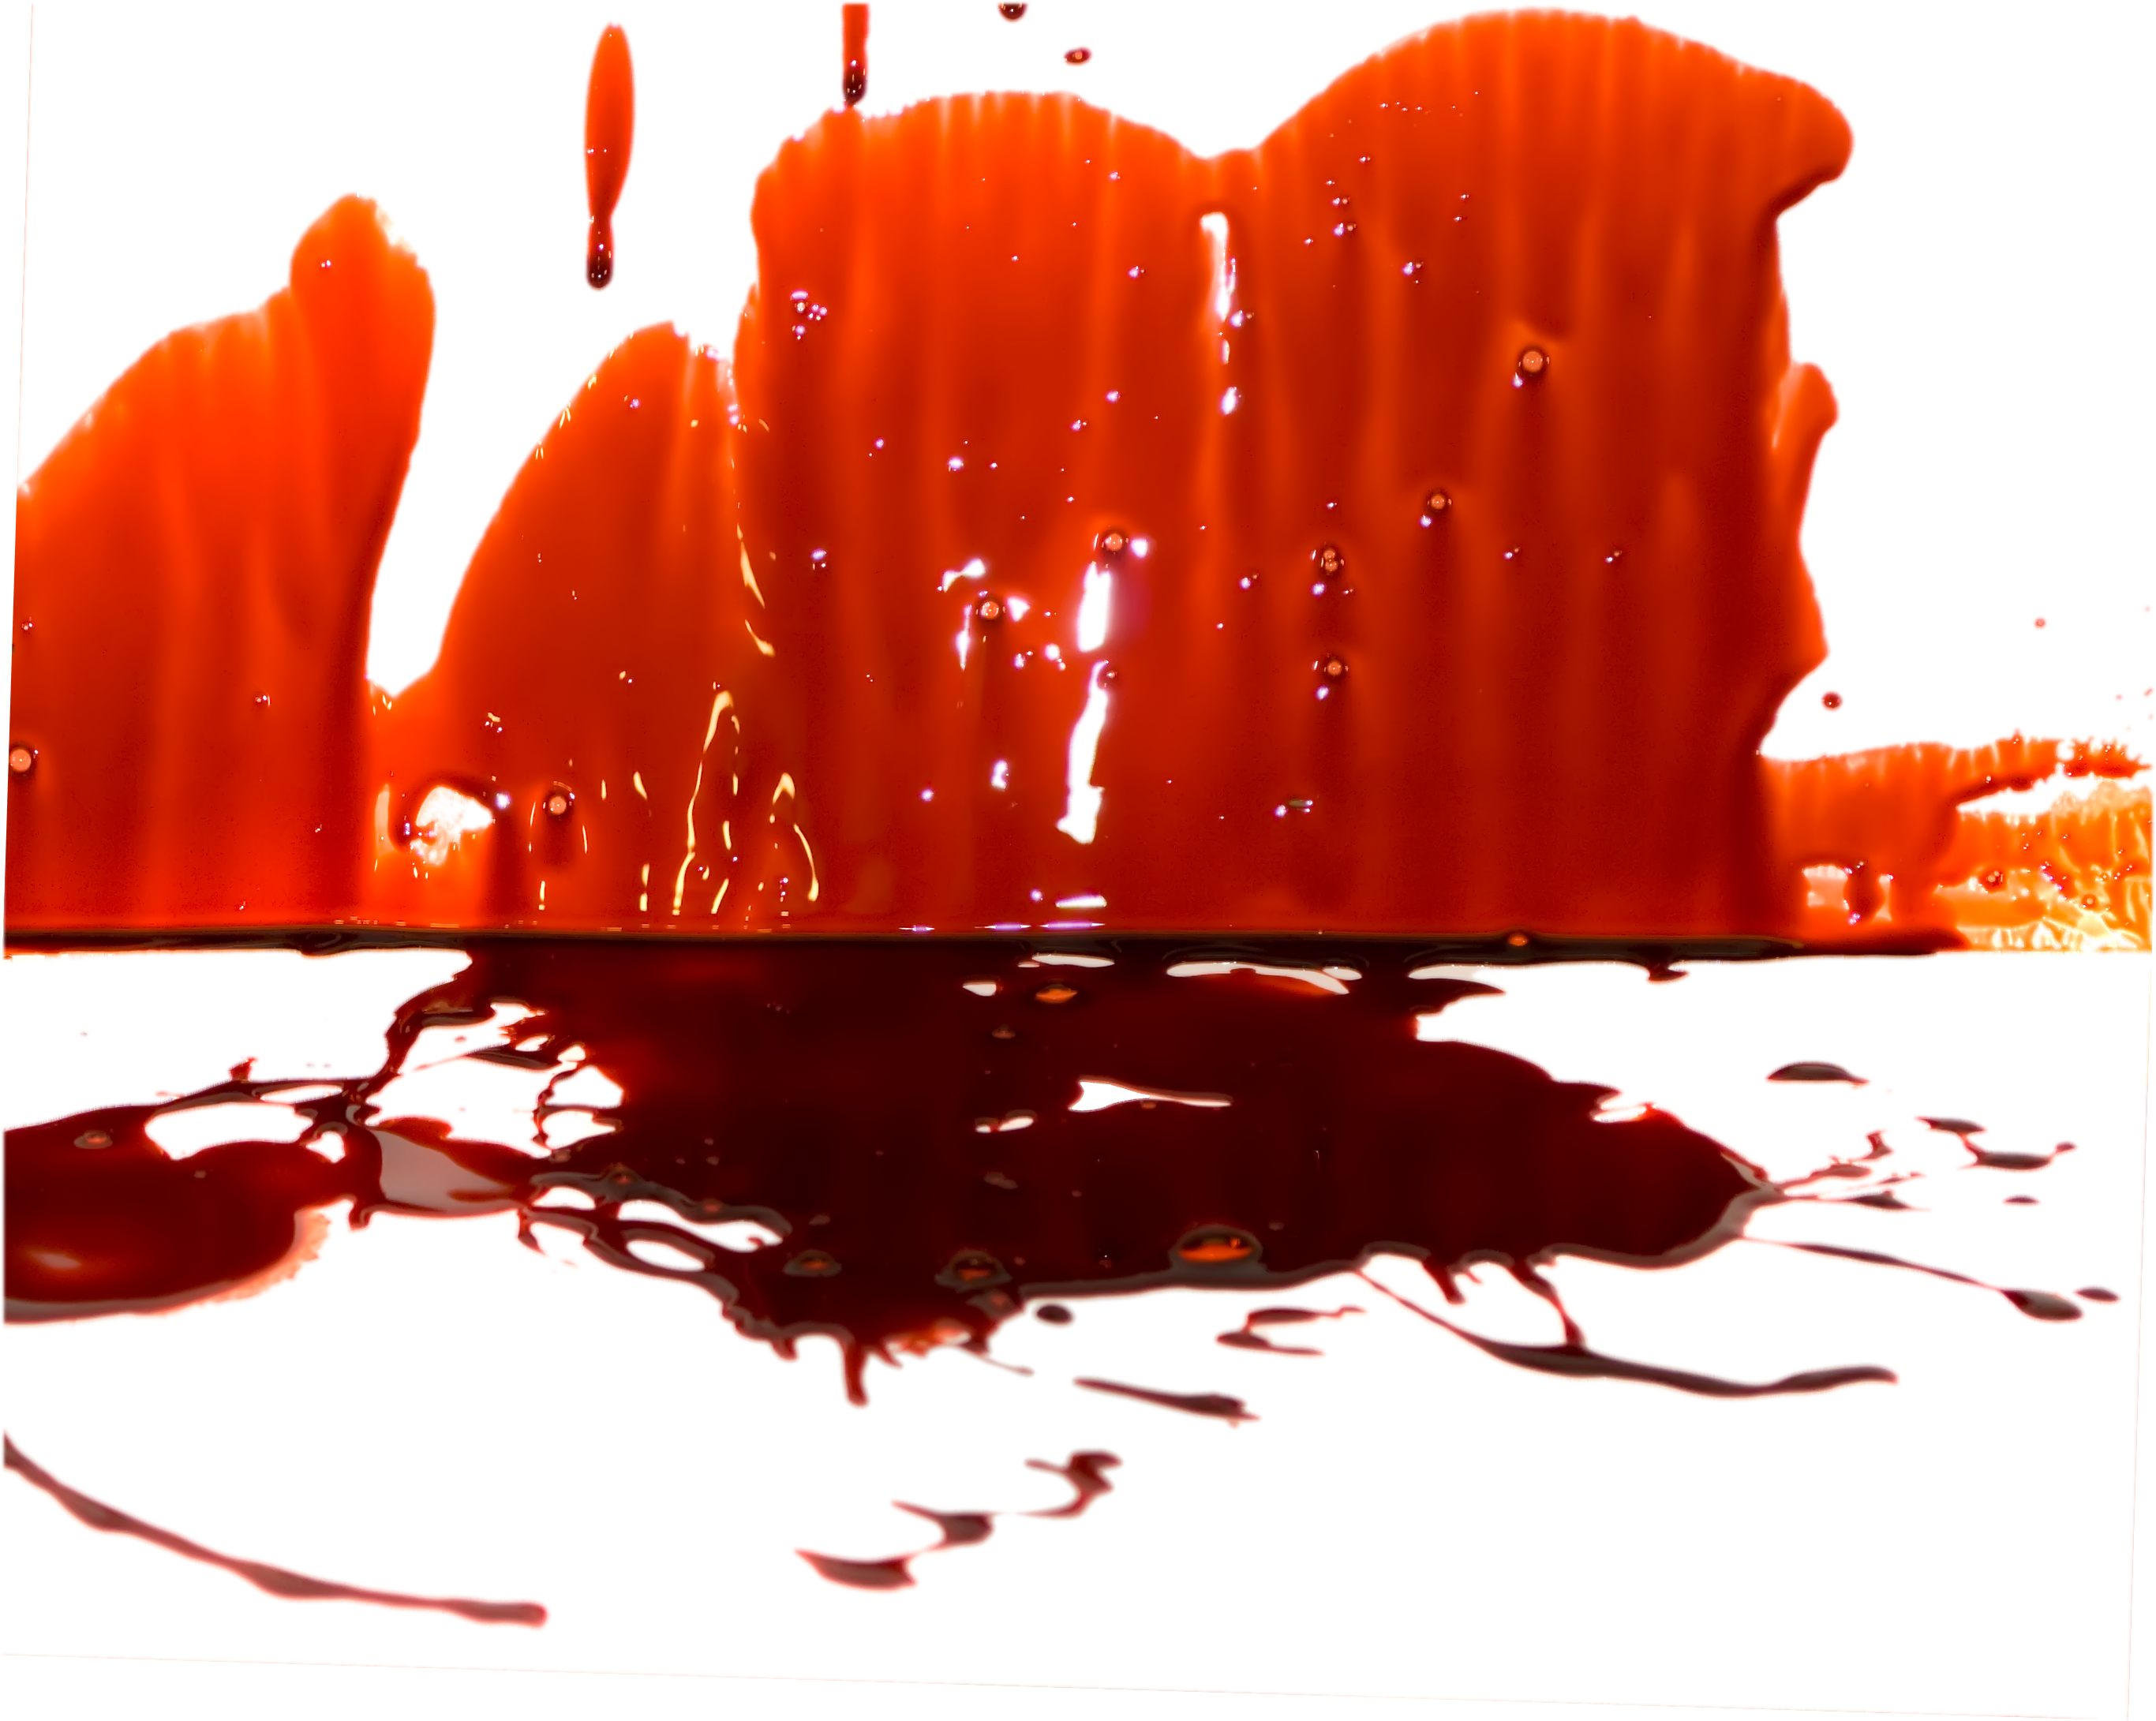 Blood PNG images free download, blood PNG splashes.